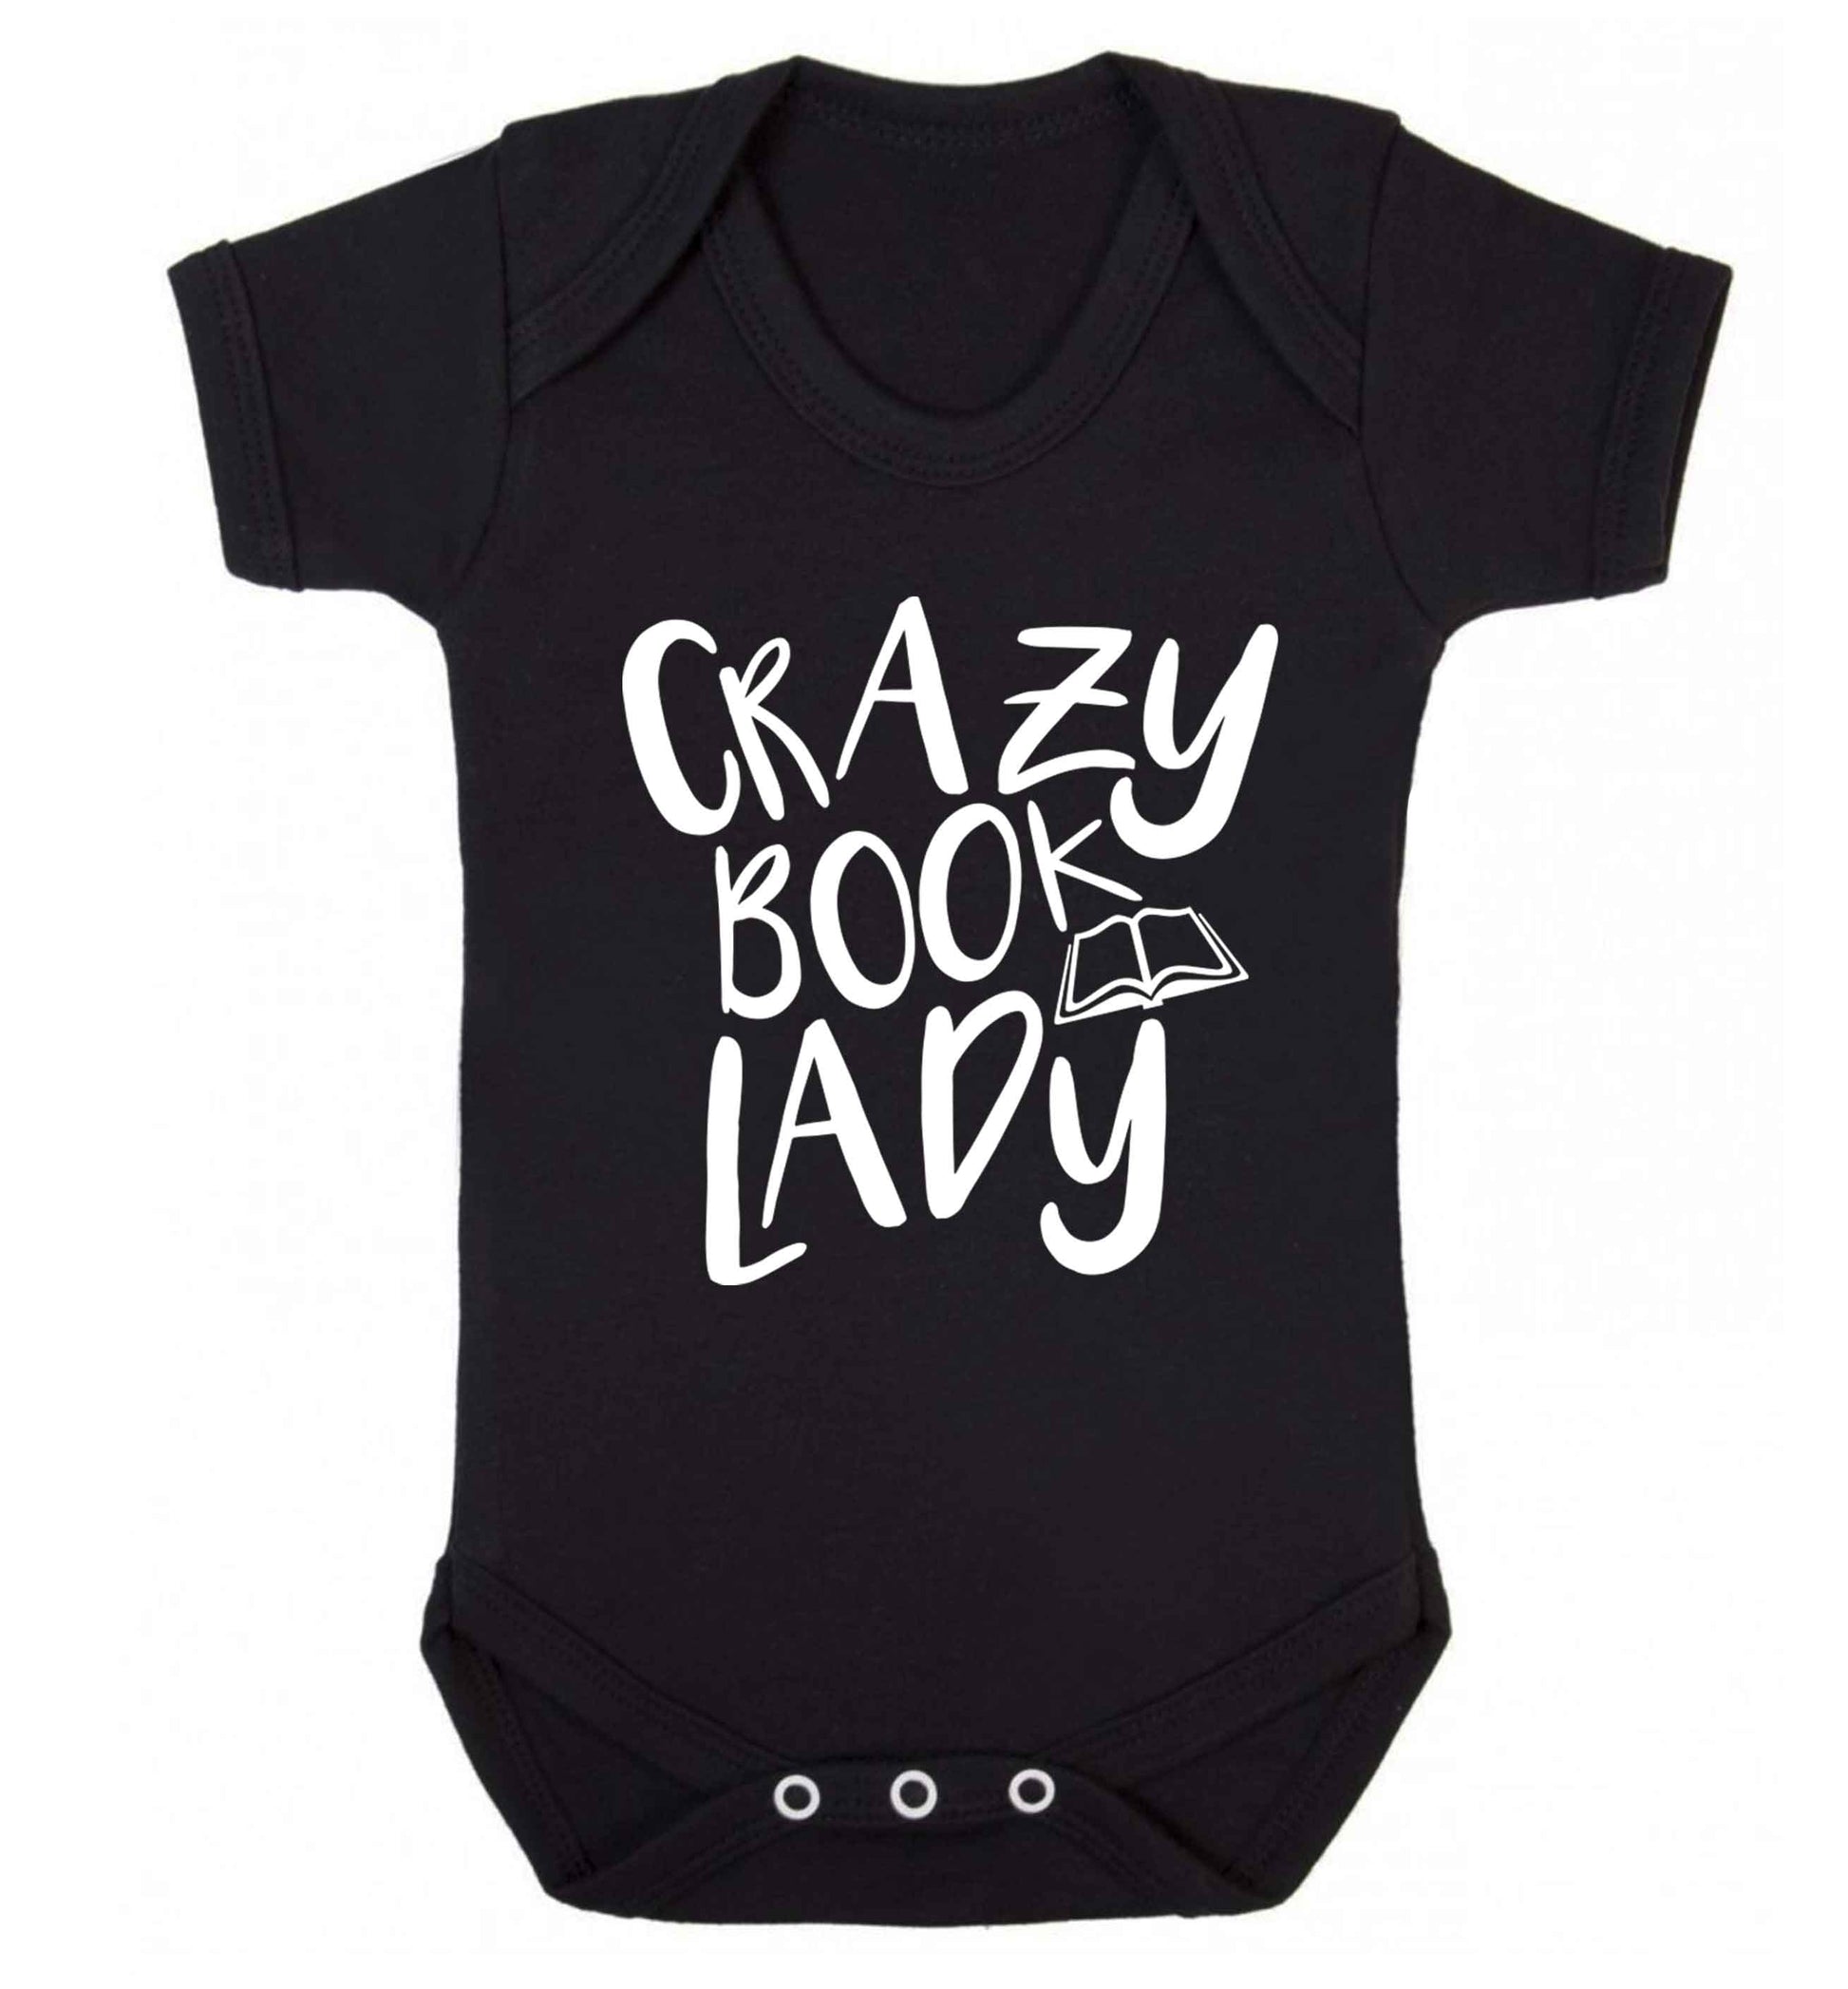 Crazy book lady Baby Vest black 18-24 months